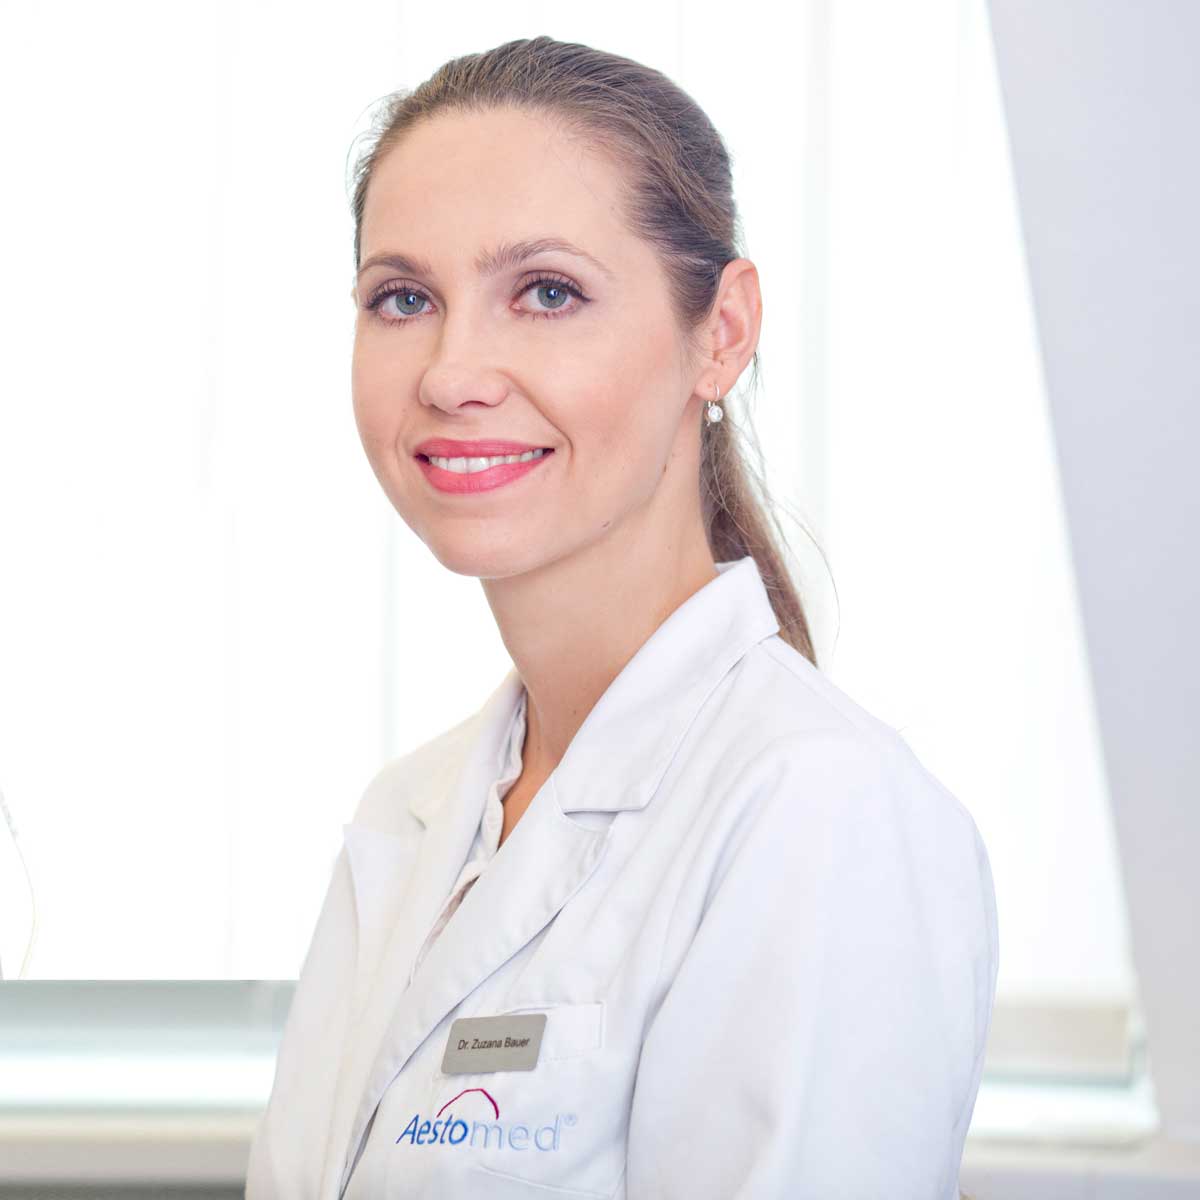 Dr. Zuzana Bauer